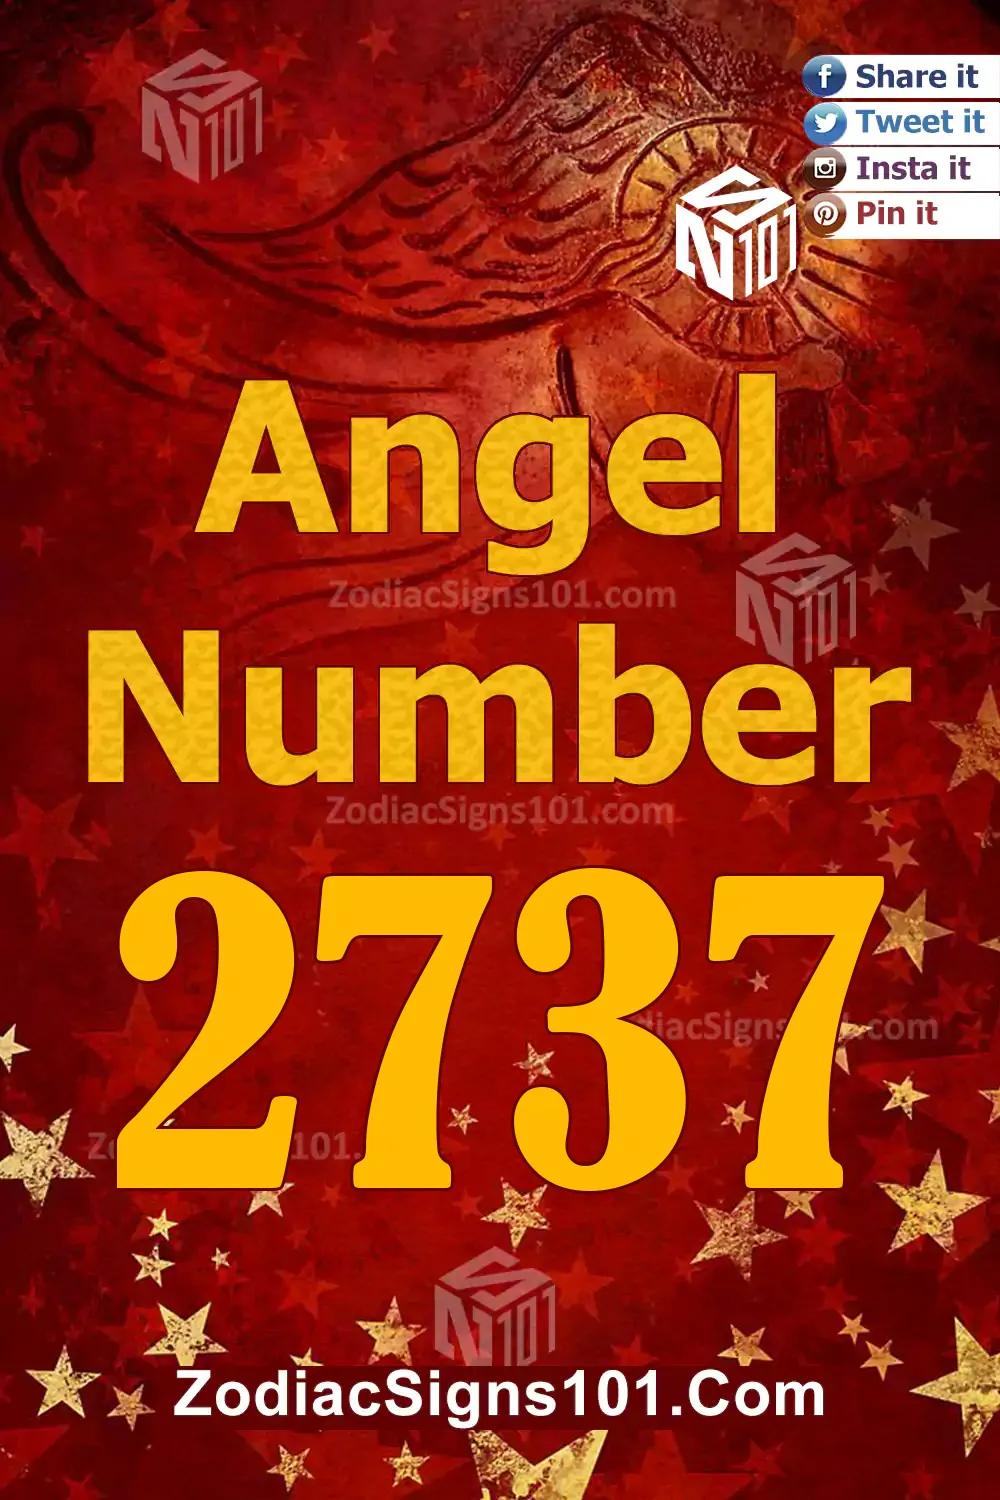 2737-Angel-Number-Meaning.jpg